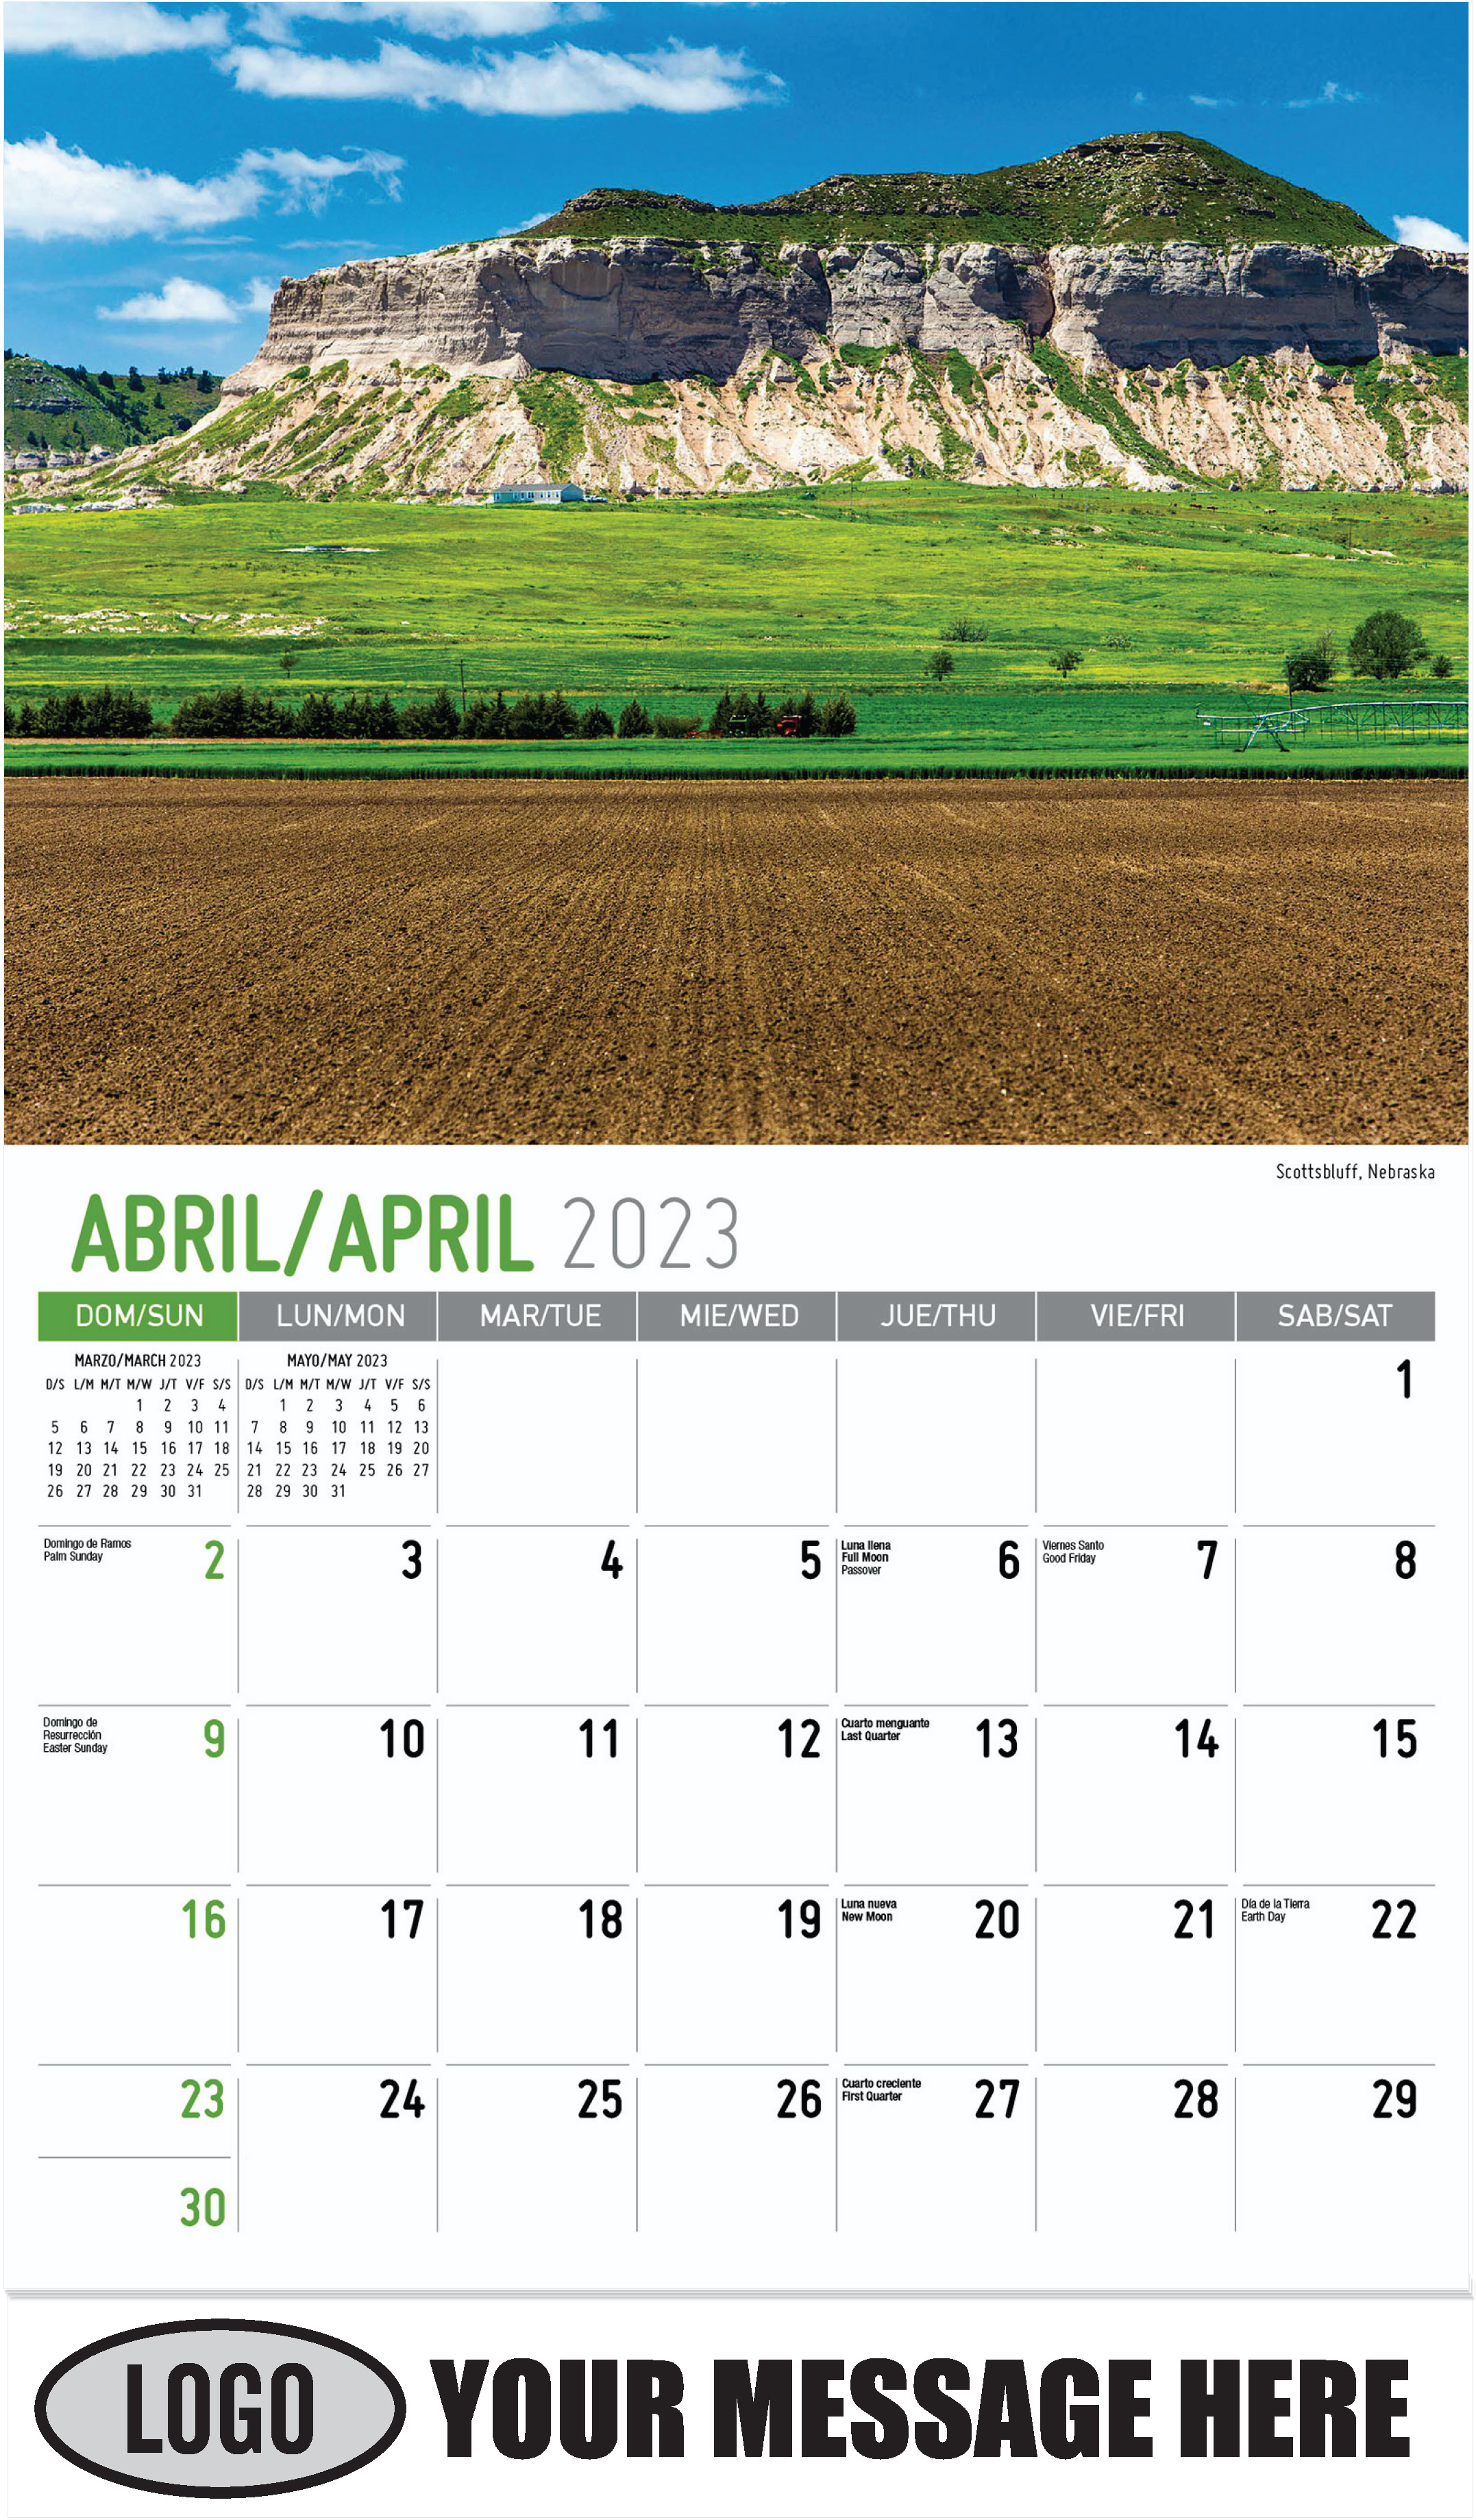 Scottsbluff, Nebraska - April - Scenes of America (Spanish-English bilingual) 2023 Promotional Calendar